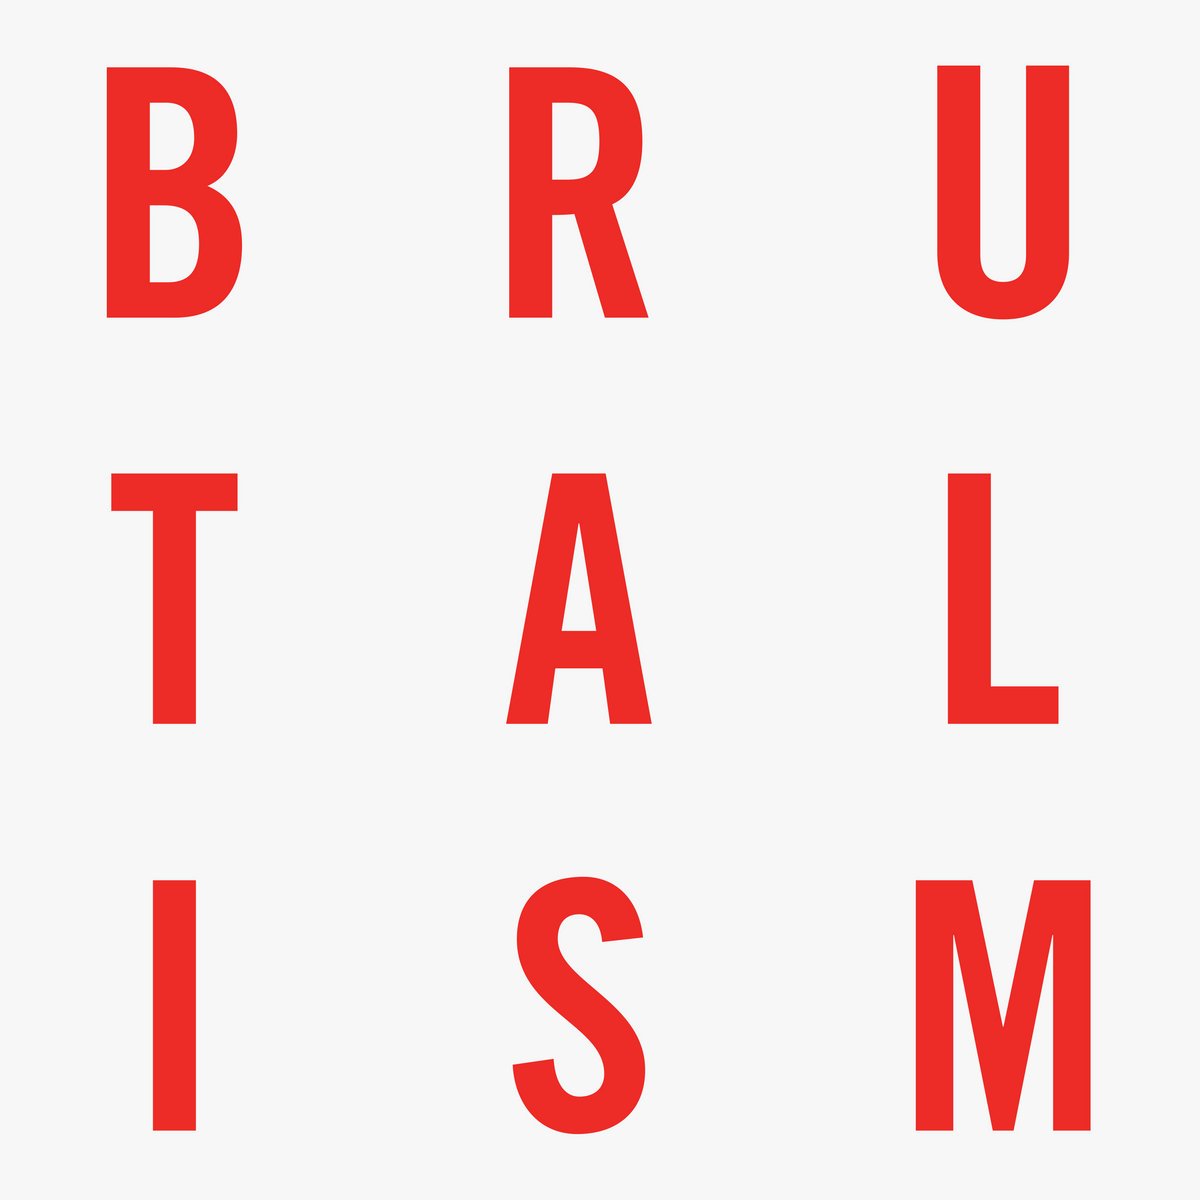 Idles "Brutalism" [Limited "Five Years of Brutalism" Red Vinyl]